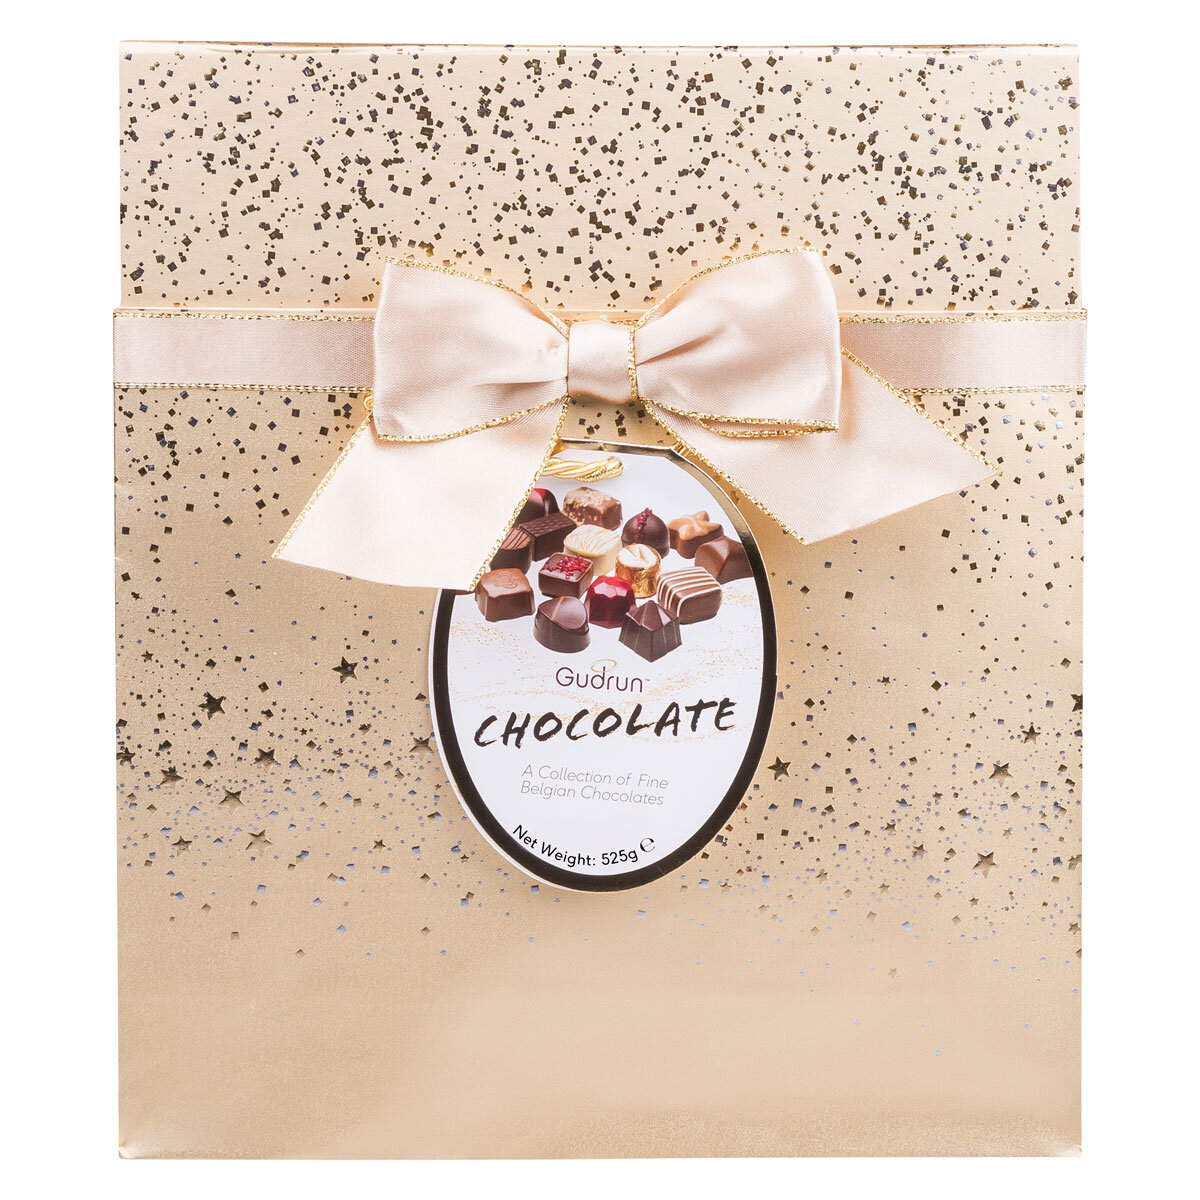 Gudrun Belgian Chocolates Box in Bag in Gold, 525g | Cost...